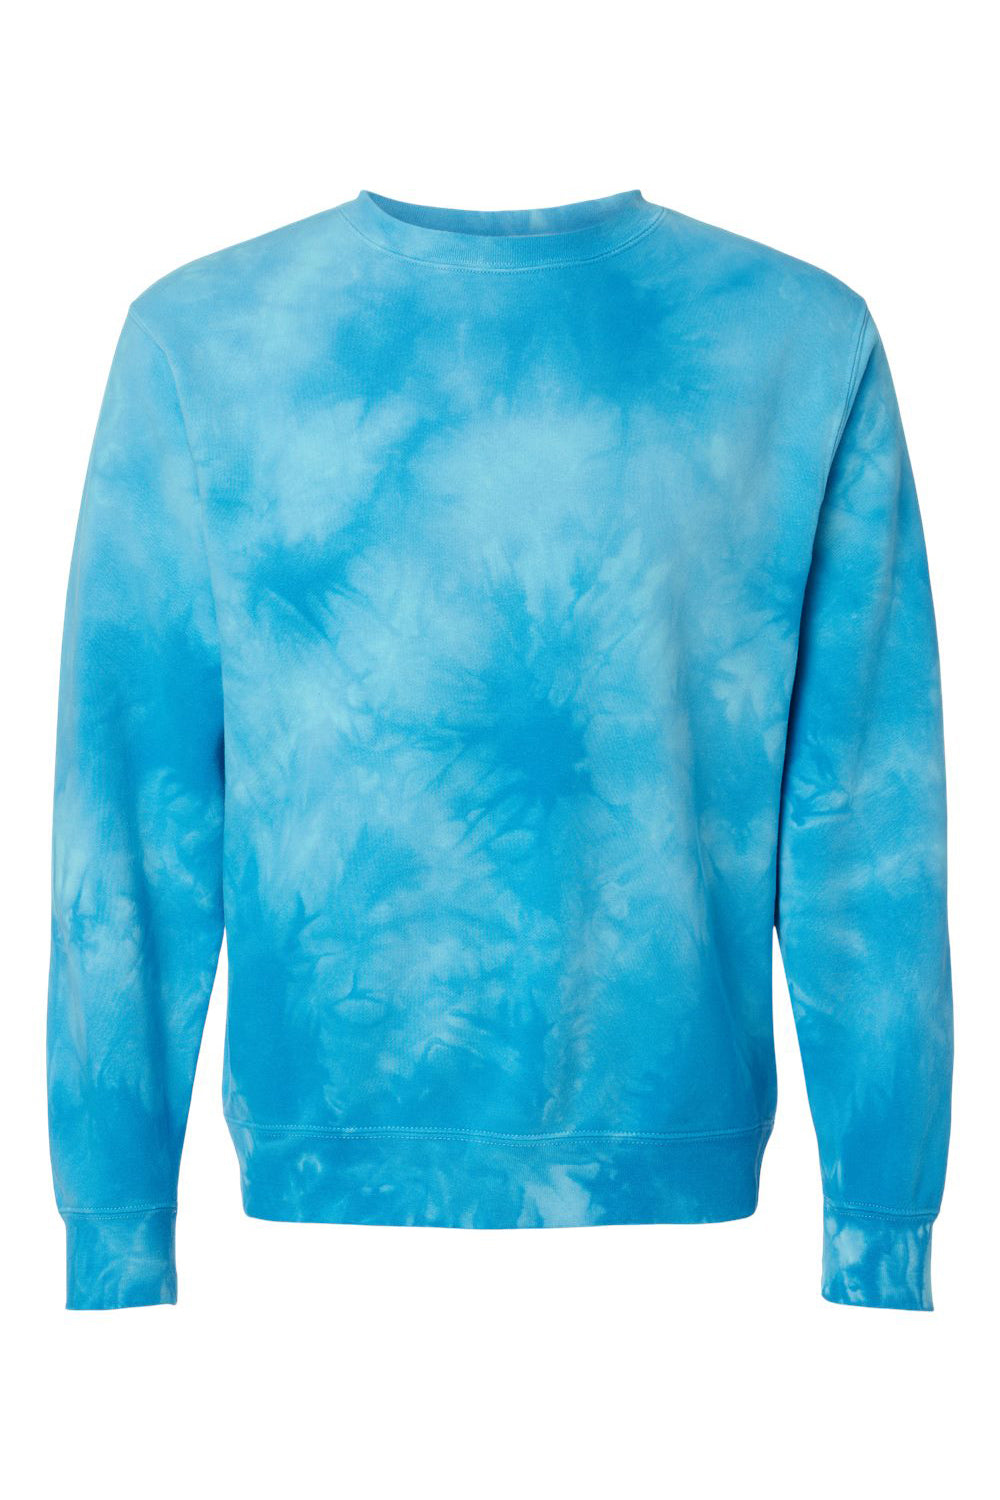 Independent Trading Co. PRM3500TD Mens Tie-Dye Crewneck Sweatshirt Aqua Blue Flat Front